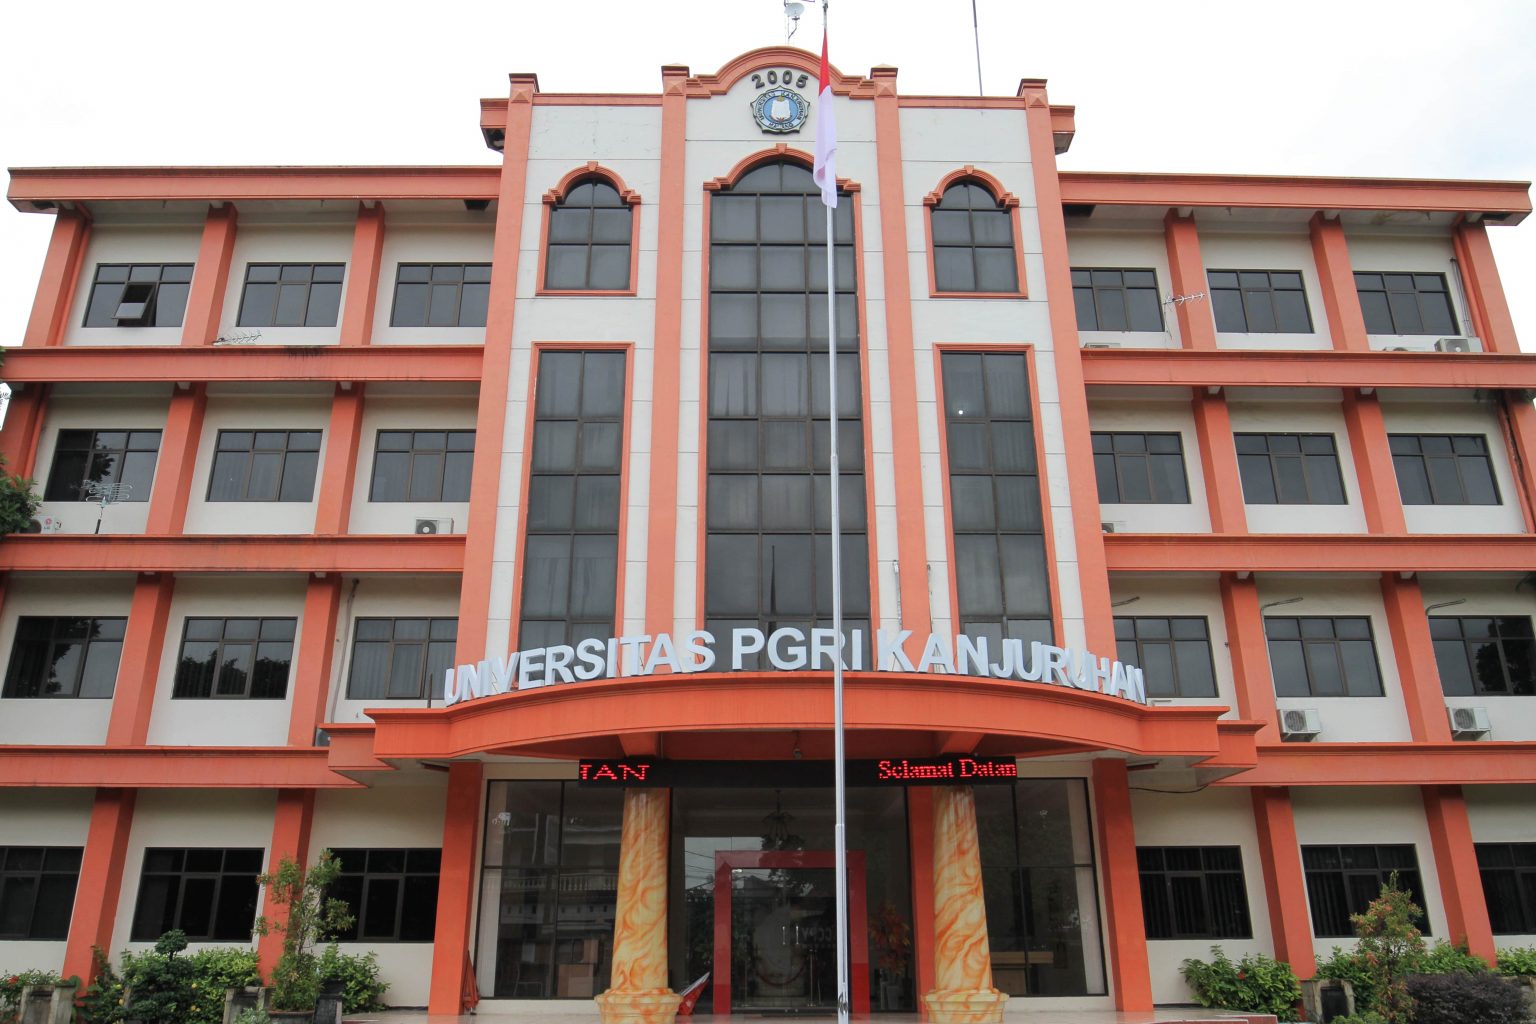 Universitas PGRI Kanjuruhan Malang. 